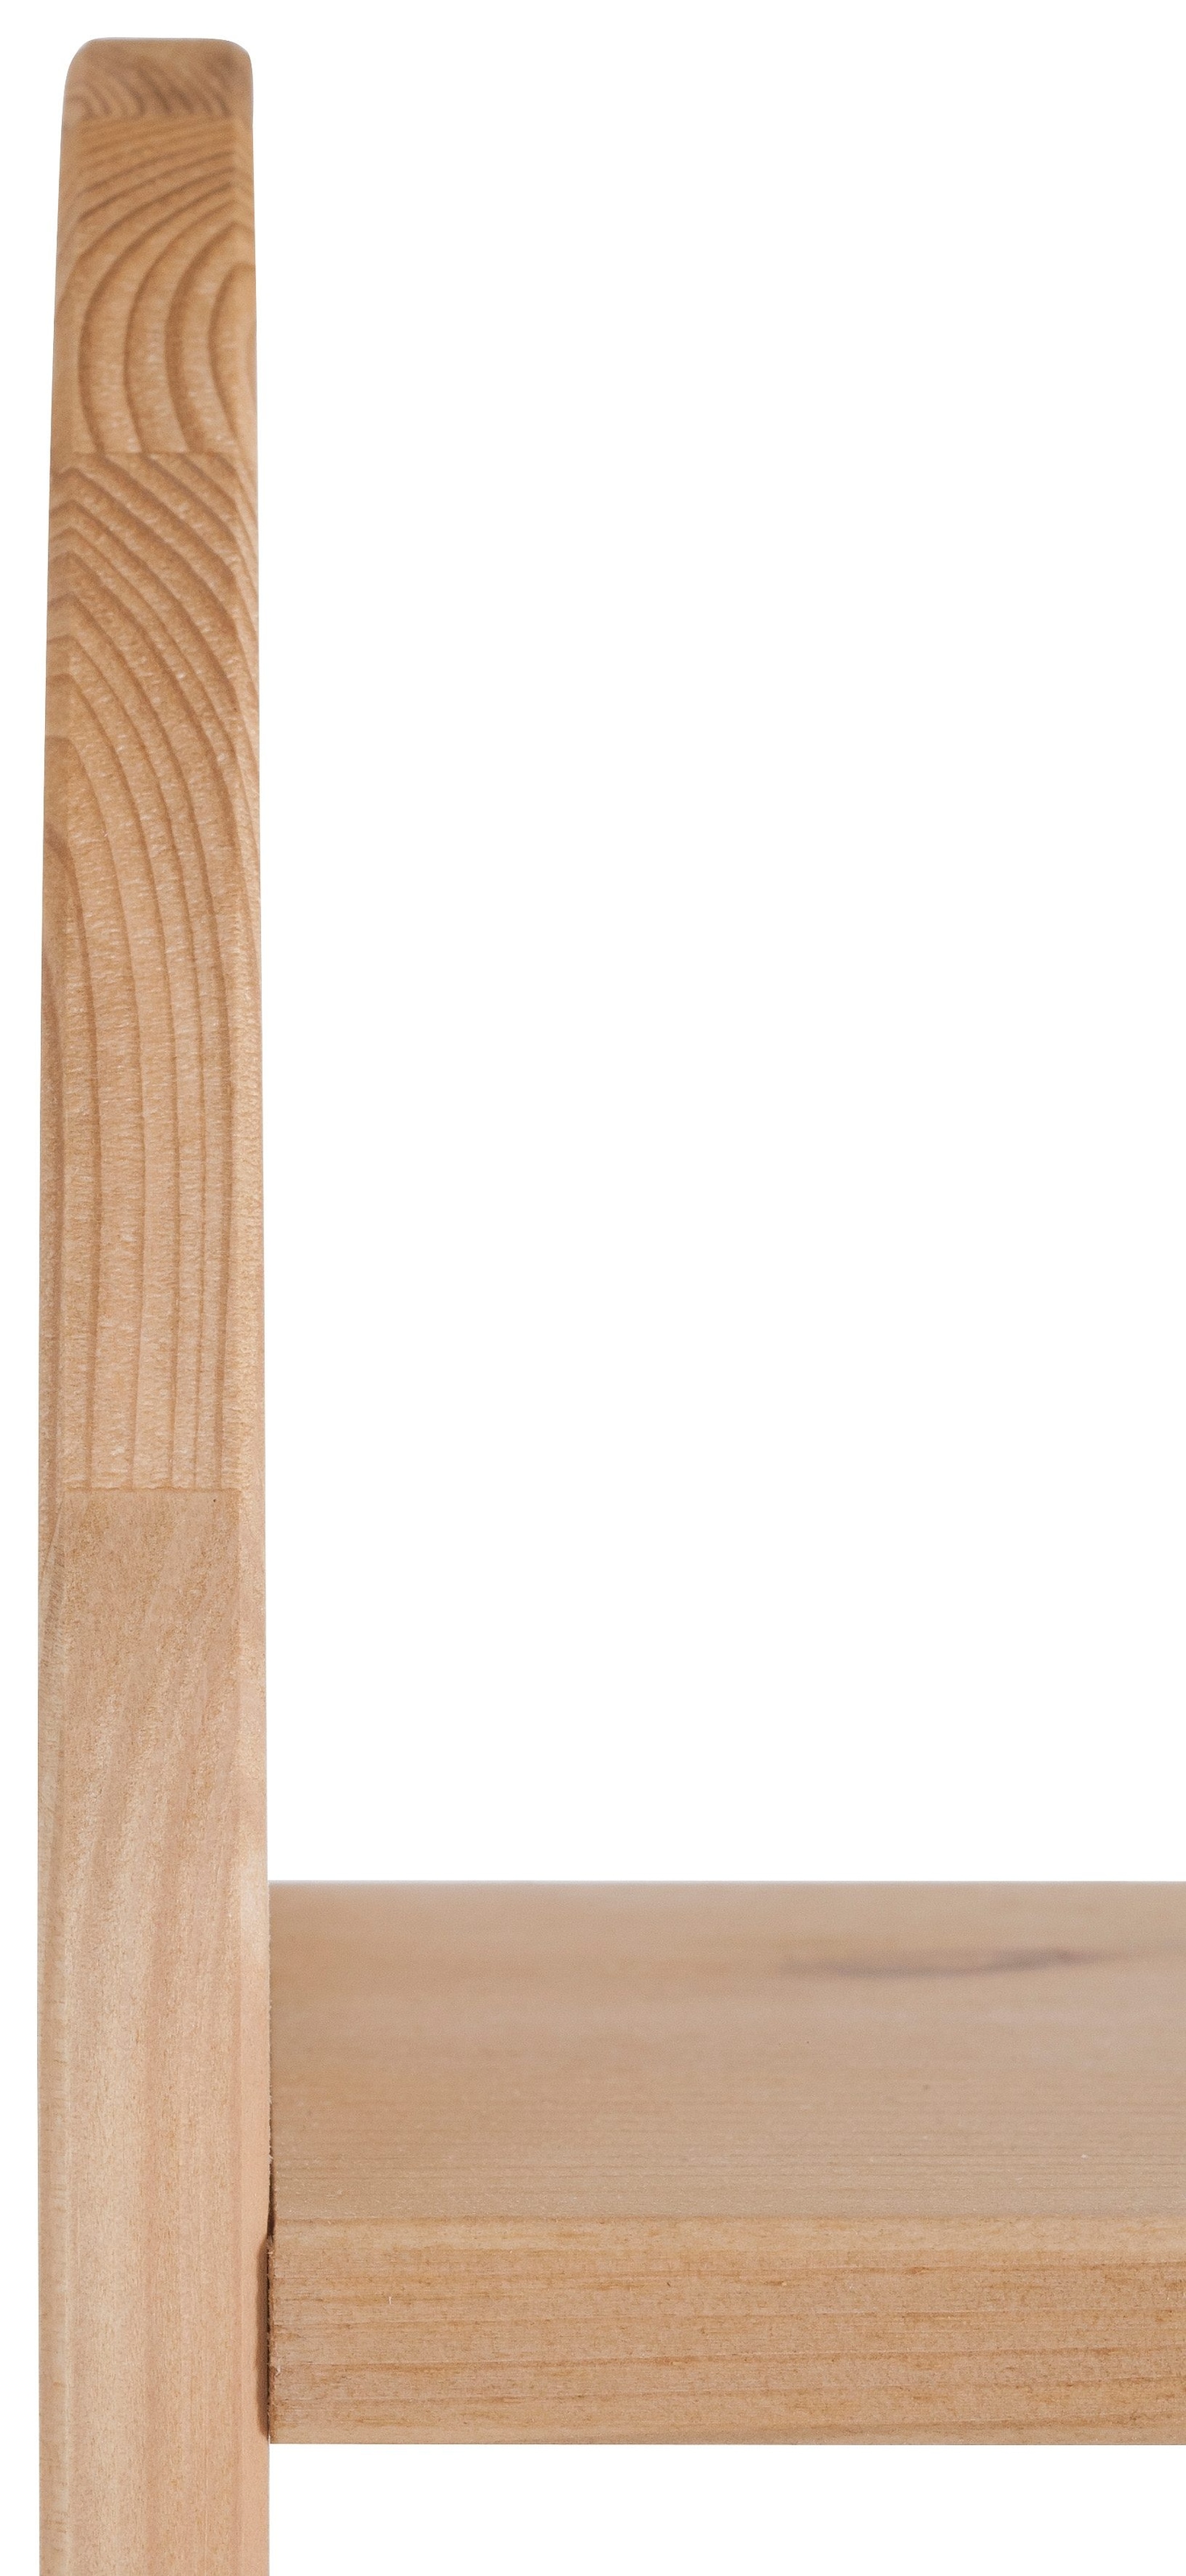 Home affaire Hängeregal »Oslo«, 75 cm breit, aus massiver Kiefer, 1 breite Schublade, Metallgriffe